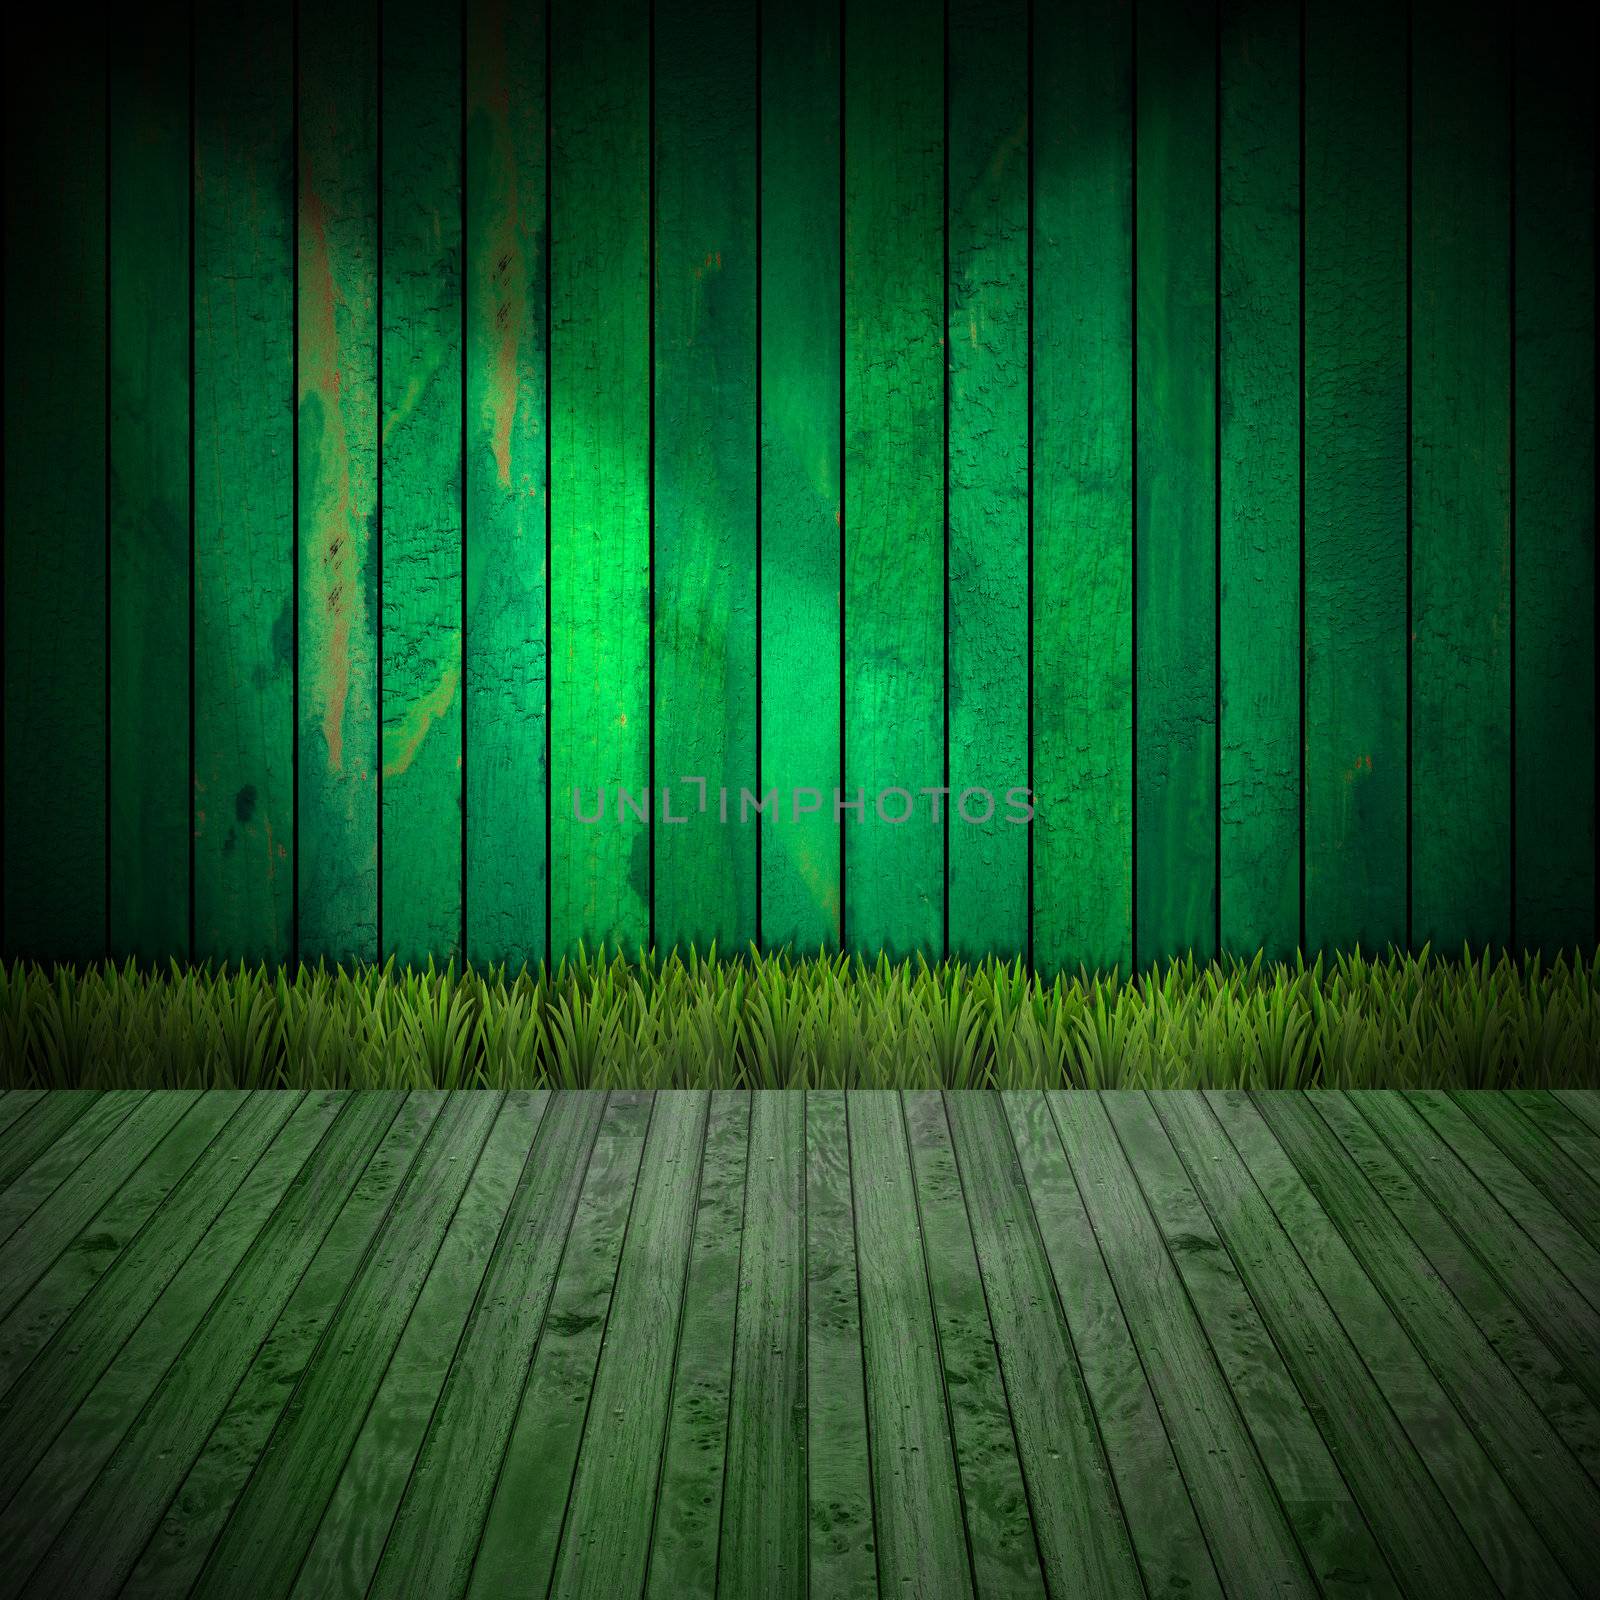 Green wooden grunge interior with green grass on wood floor